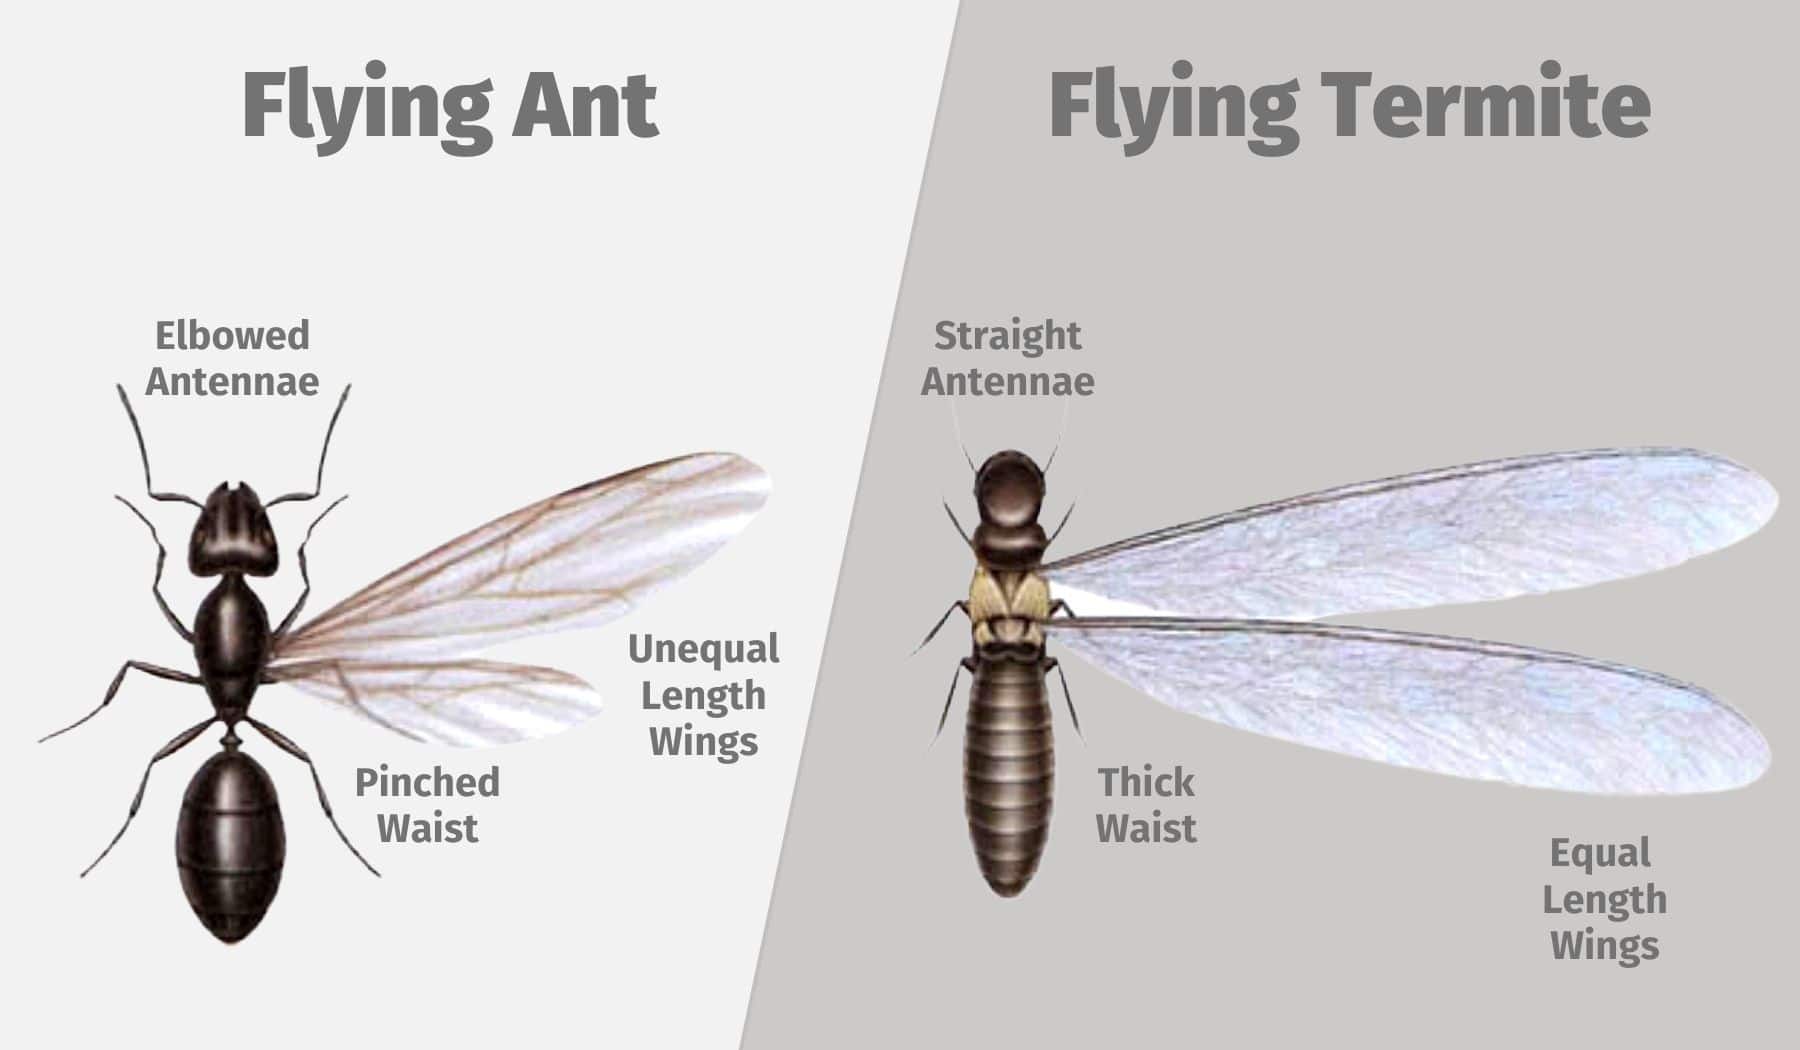 Do Flying Termites Eat Wood?